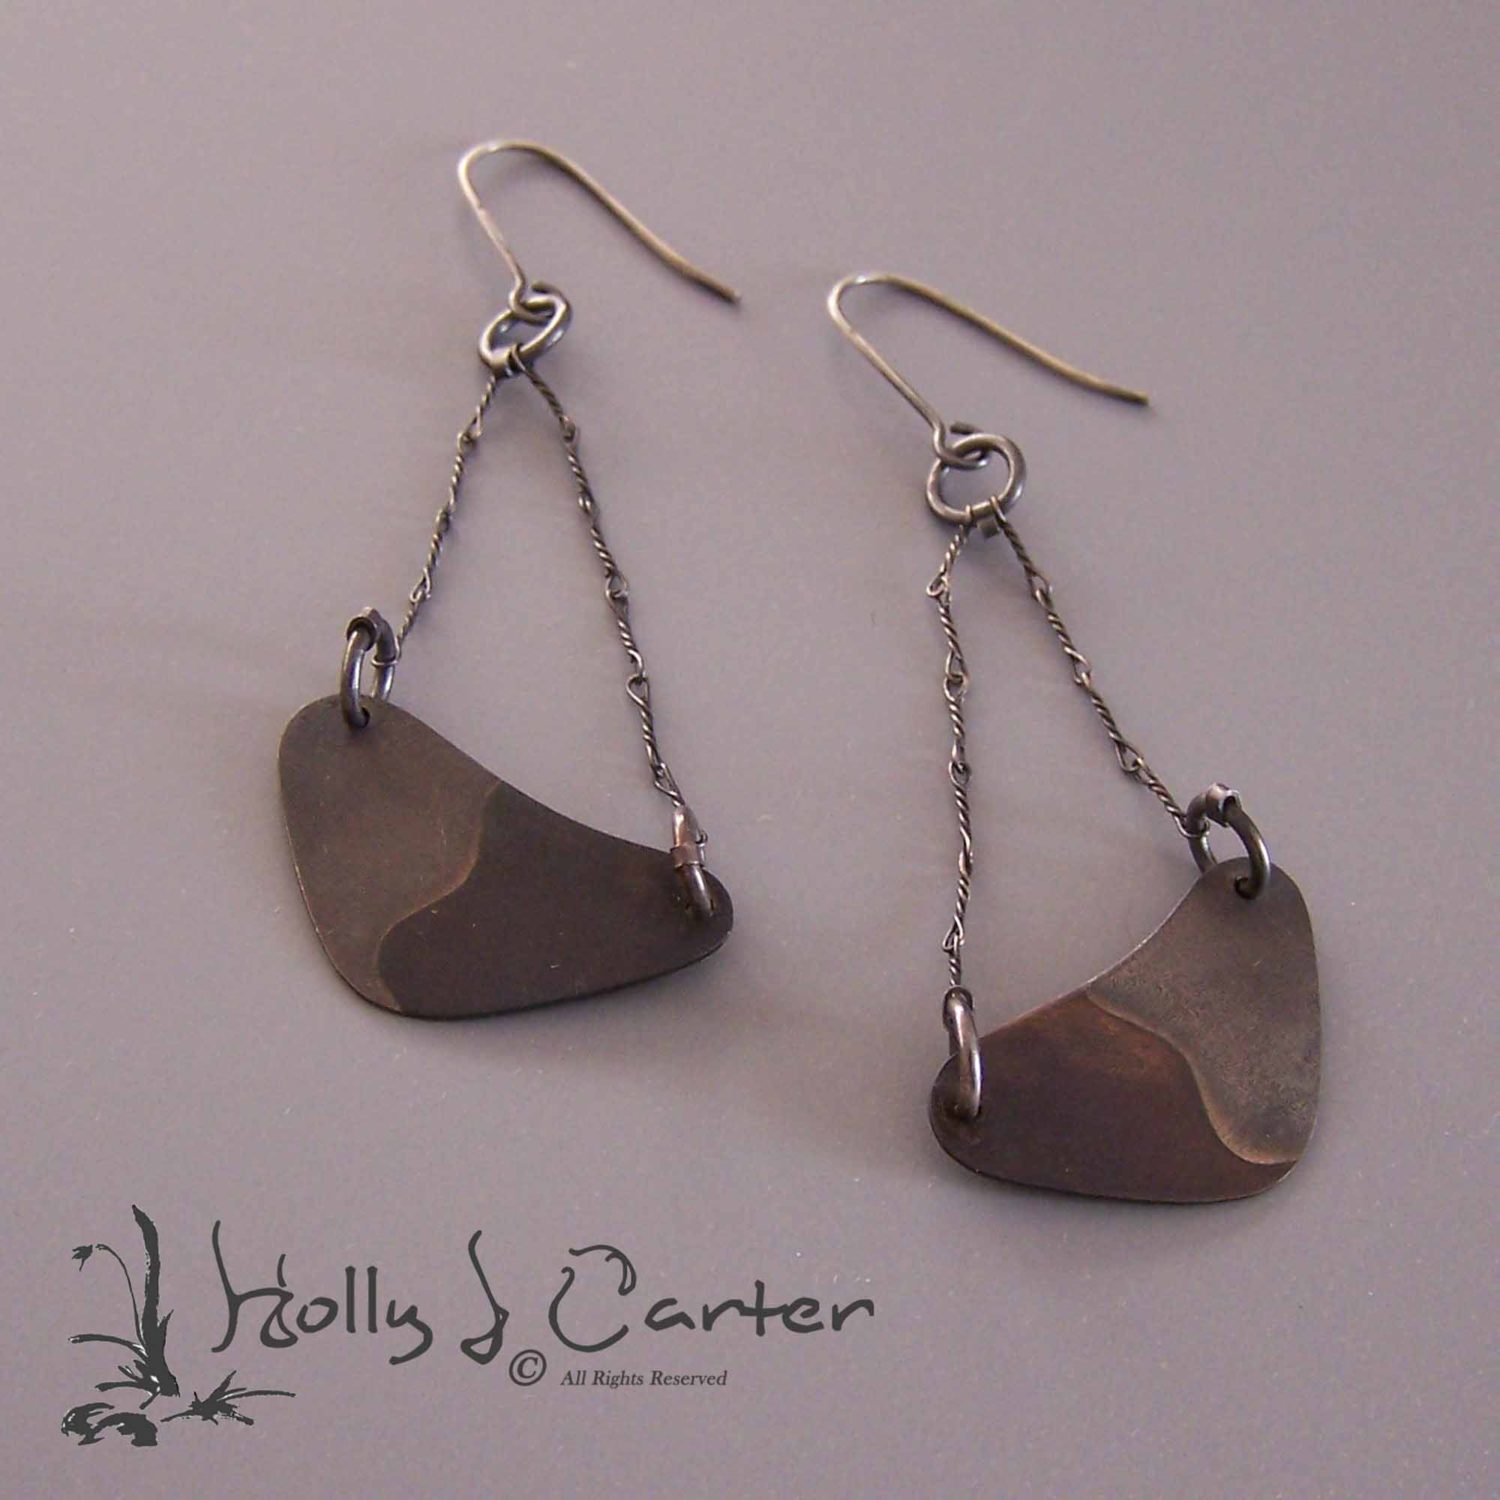 Boomerang Married Metals Earrings by Holly J Carter